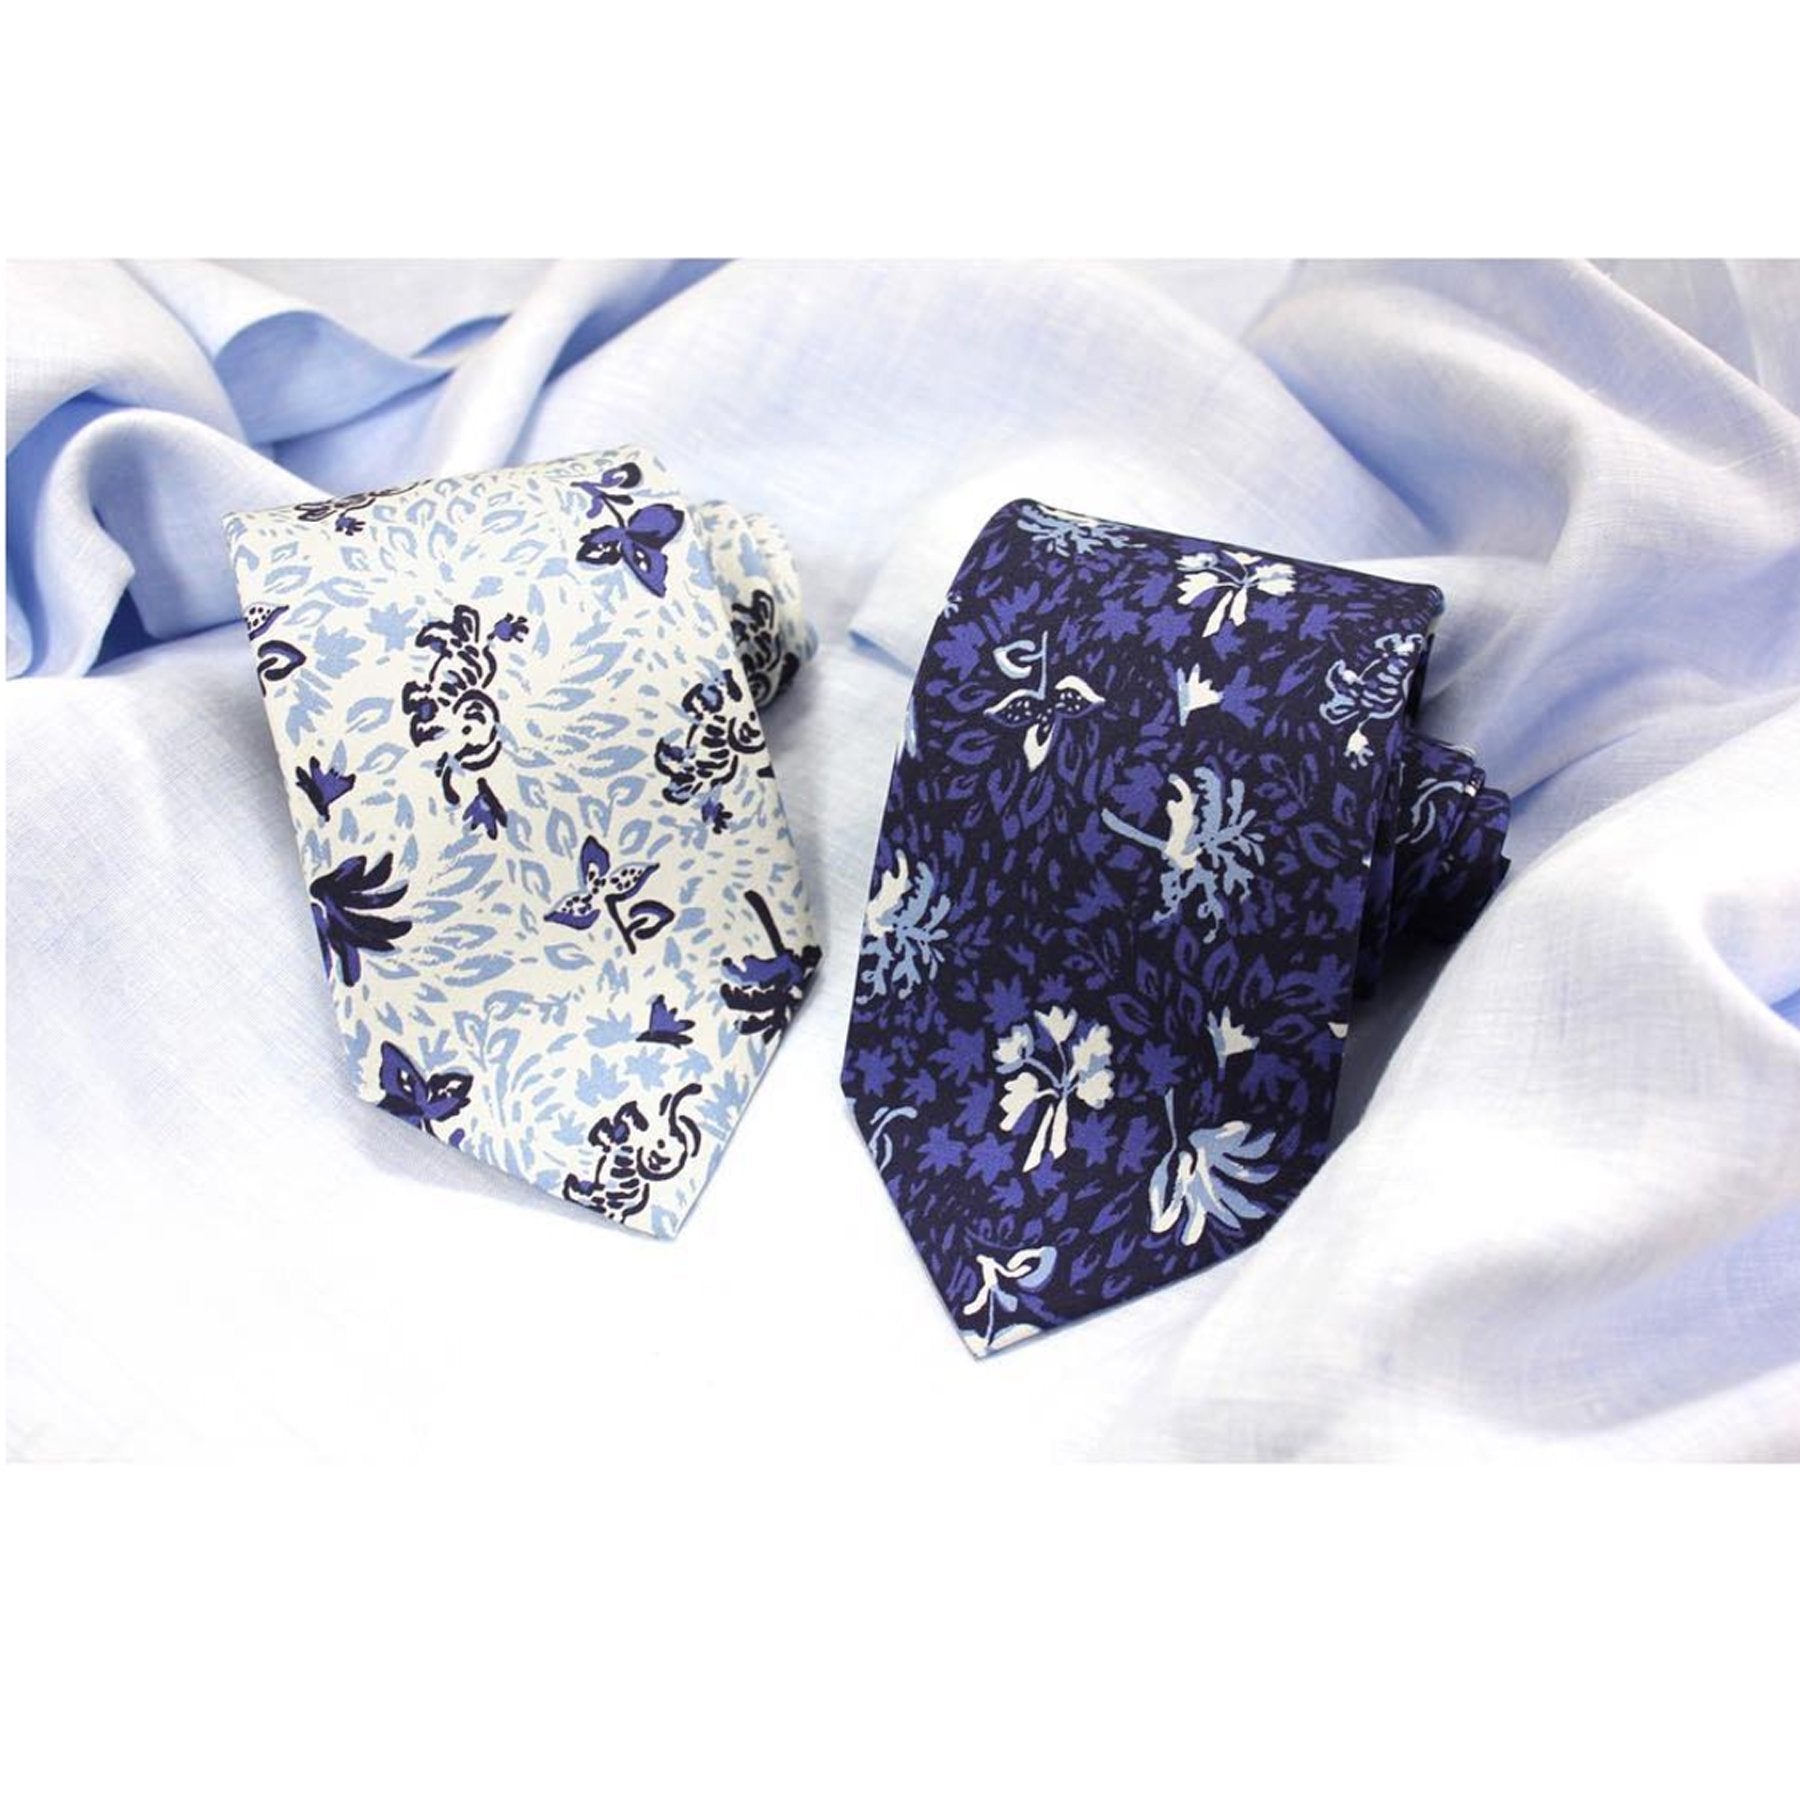 Spring/Summer Floral Silk Ties, handmade in London - Emma Willis